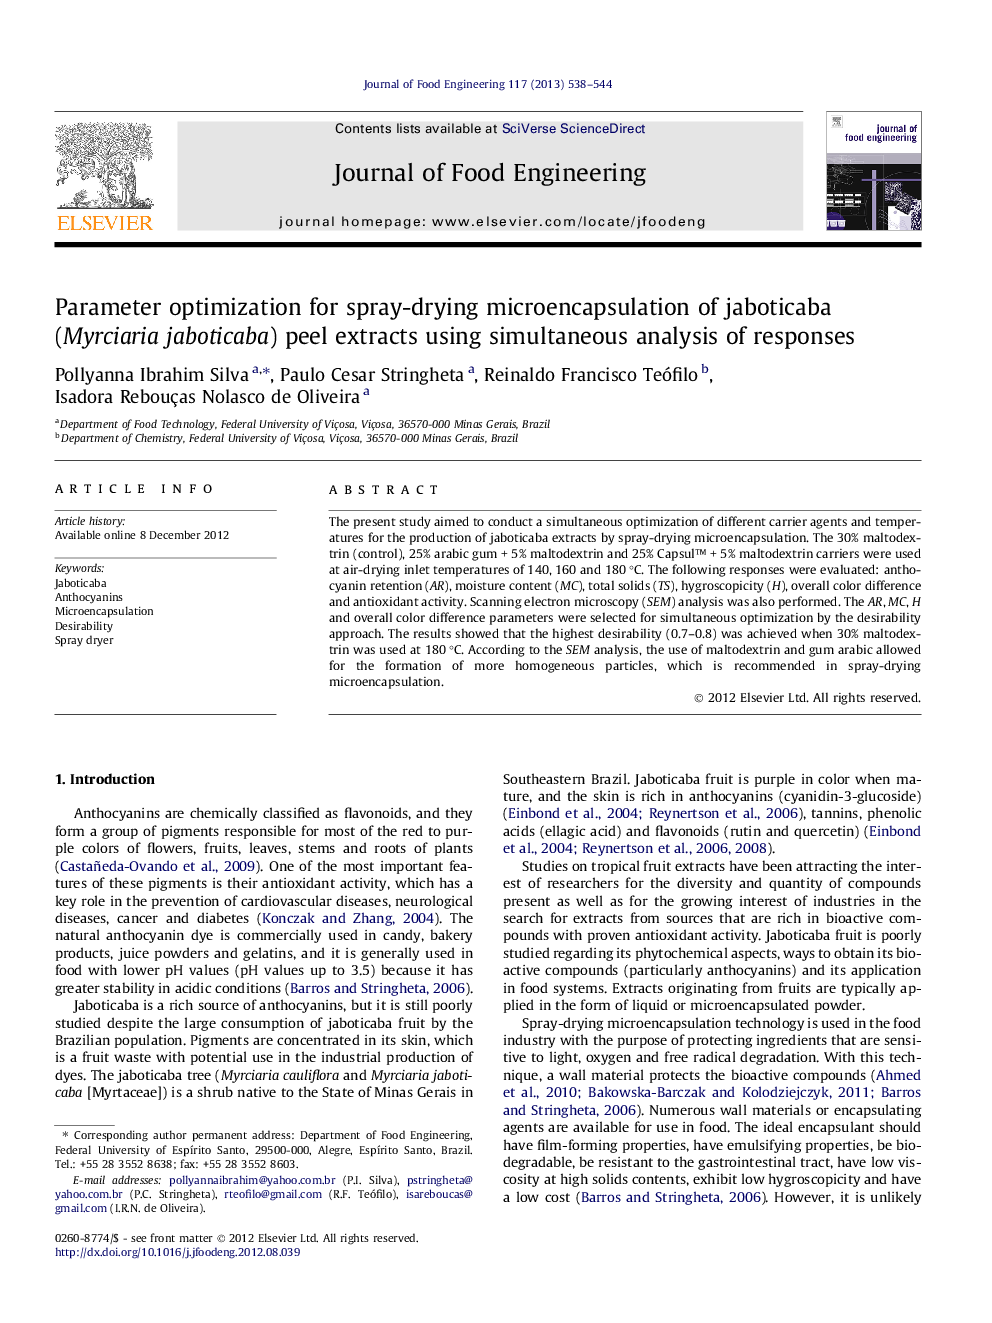 Parameter optimization for spray-drying microencapsulation of jaboticaba (Myrciaria jaboticaba) peel extracts using simultaneous analysis of responses